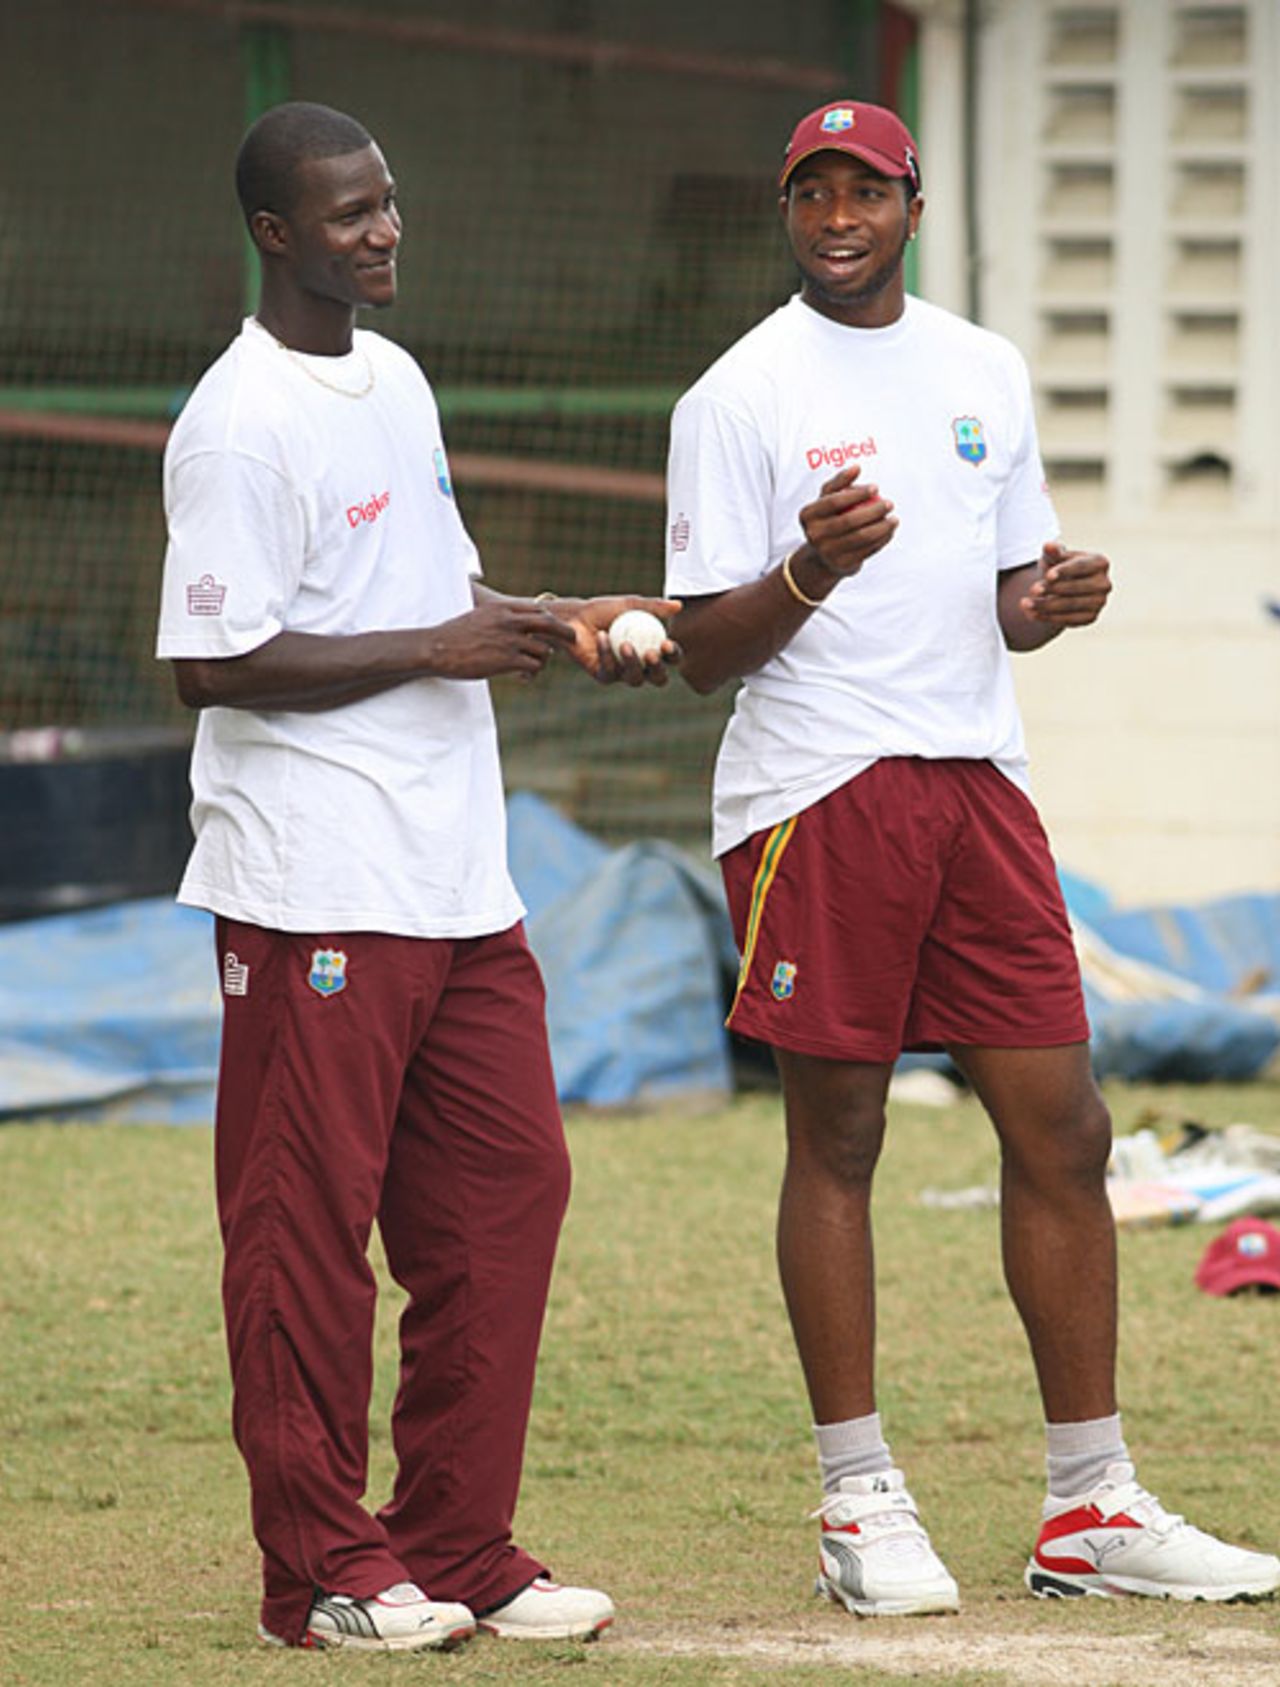 Kieron Pollard and Darren Sammy during a training session, Queen's Park Oval, Trinidad, April 9, 2008